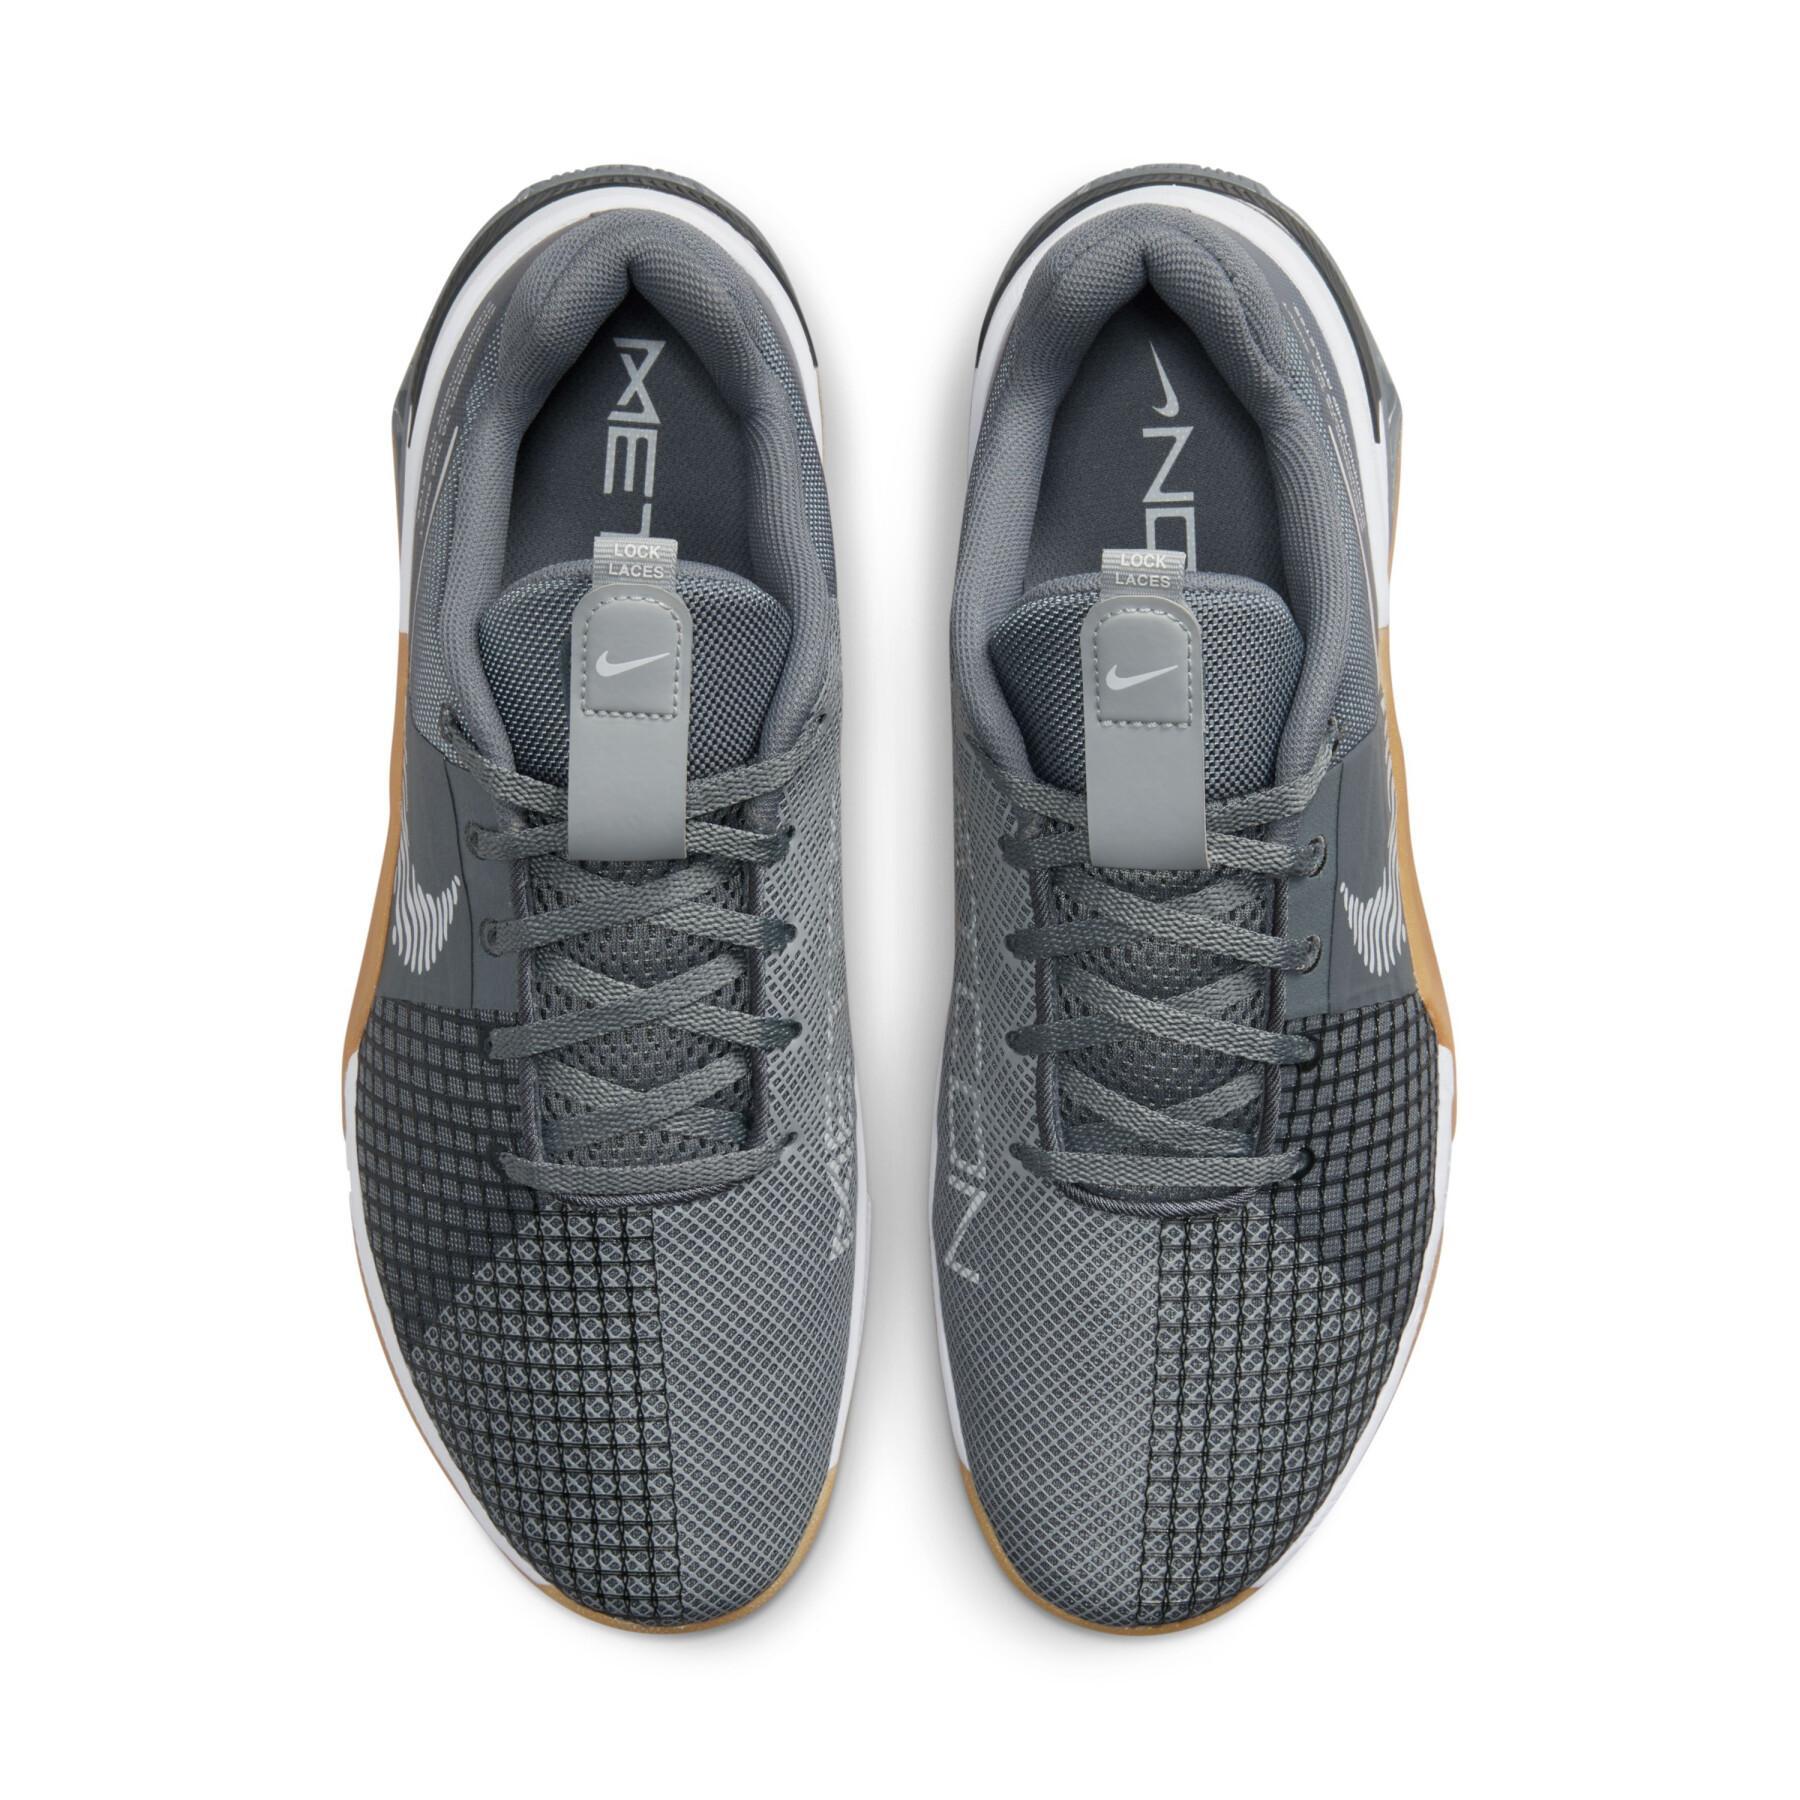 CrossFit Schuhe Nike Metcon 8